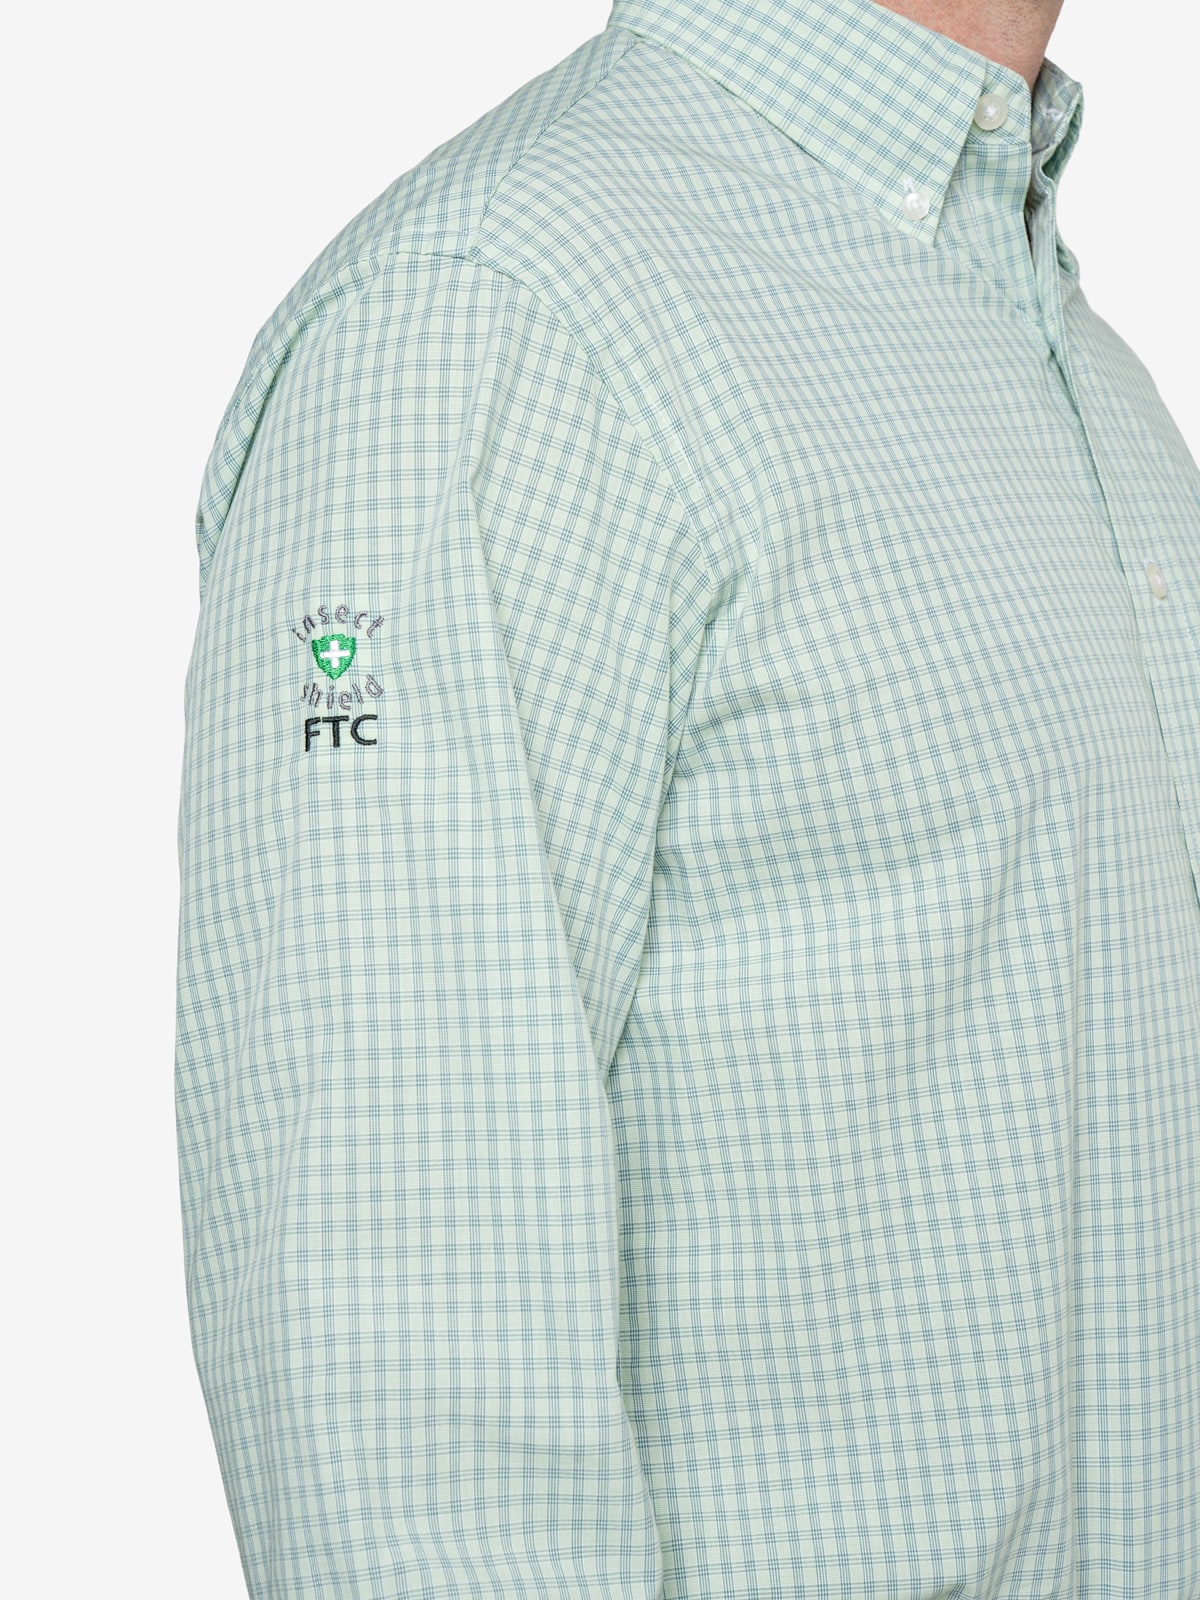 Insect Shield Men's Mini-Plaid Wrinkle-Resistant Shirt